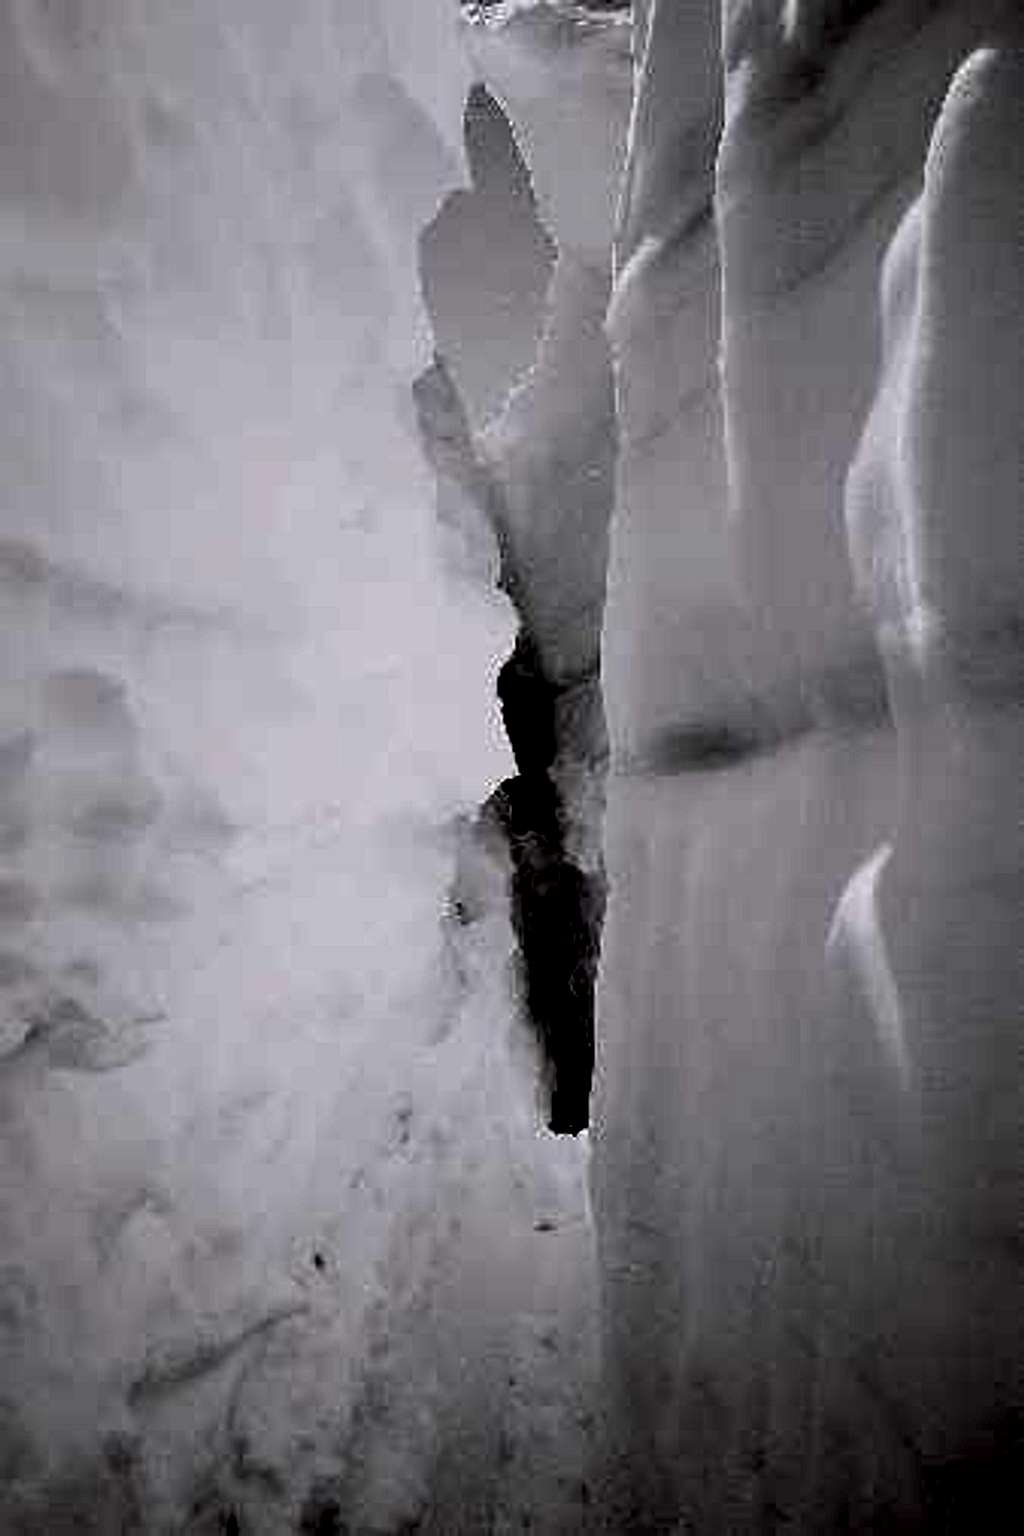 Crevasse on the Sulfide Glaicer